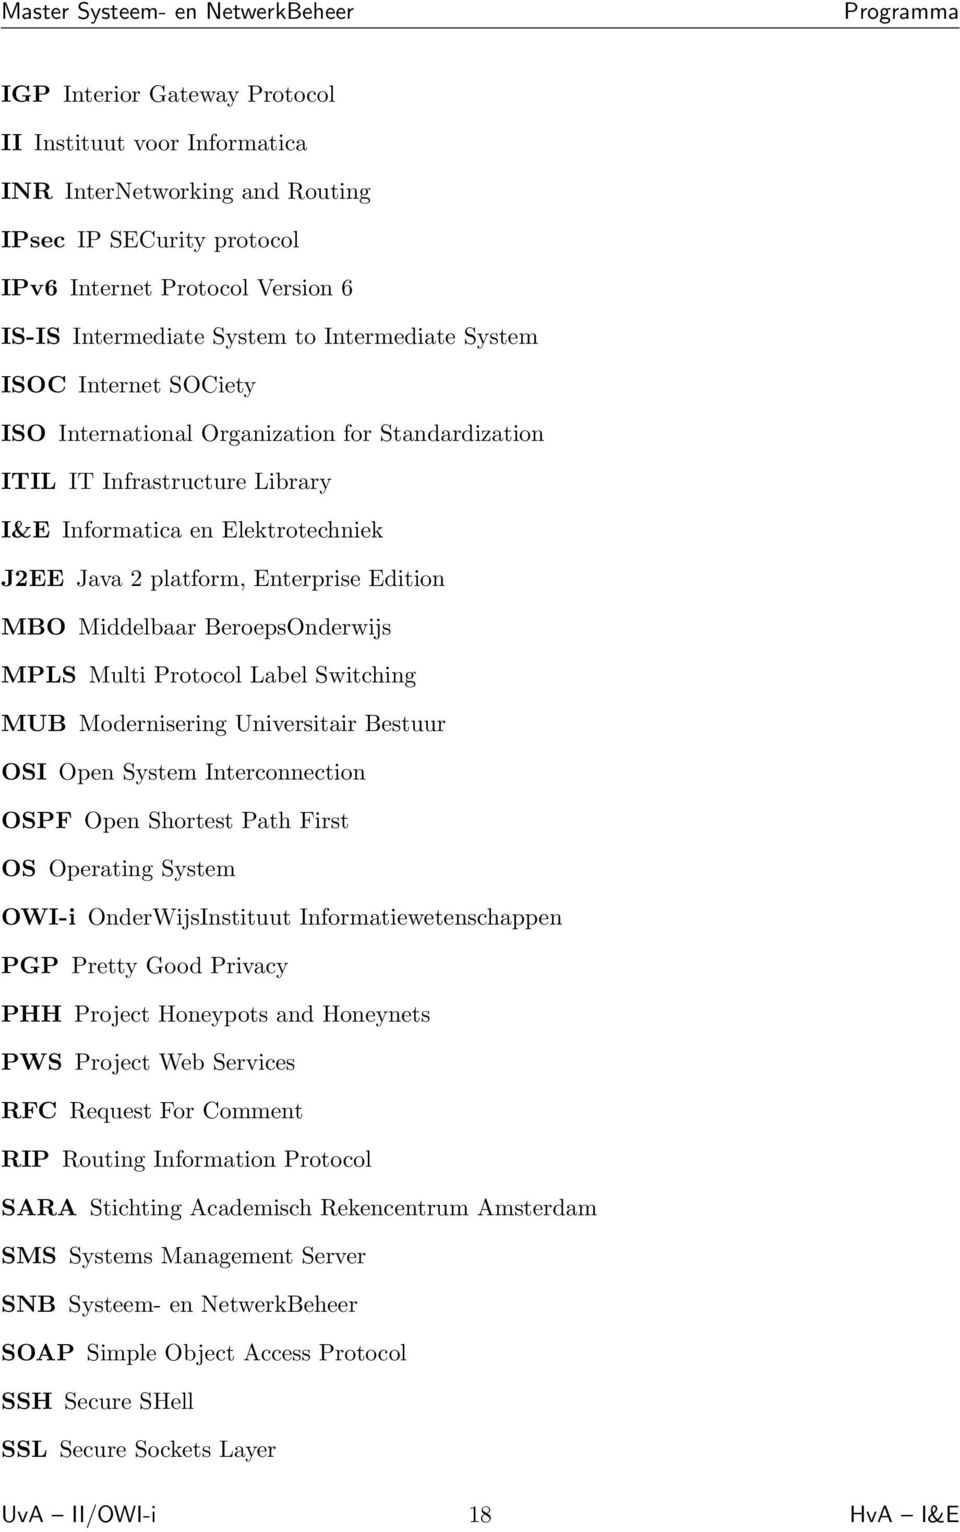 Middelbaar BeroepsOnderwijs MPLS Multi Protocol Label Switching MUB Modernisering Universitair Bestuur OSI Open System Interconnection OSPF Open Shortest Path First OS Operating System OWI-i